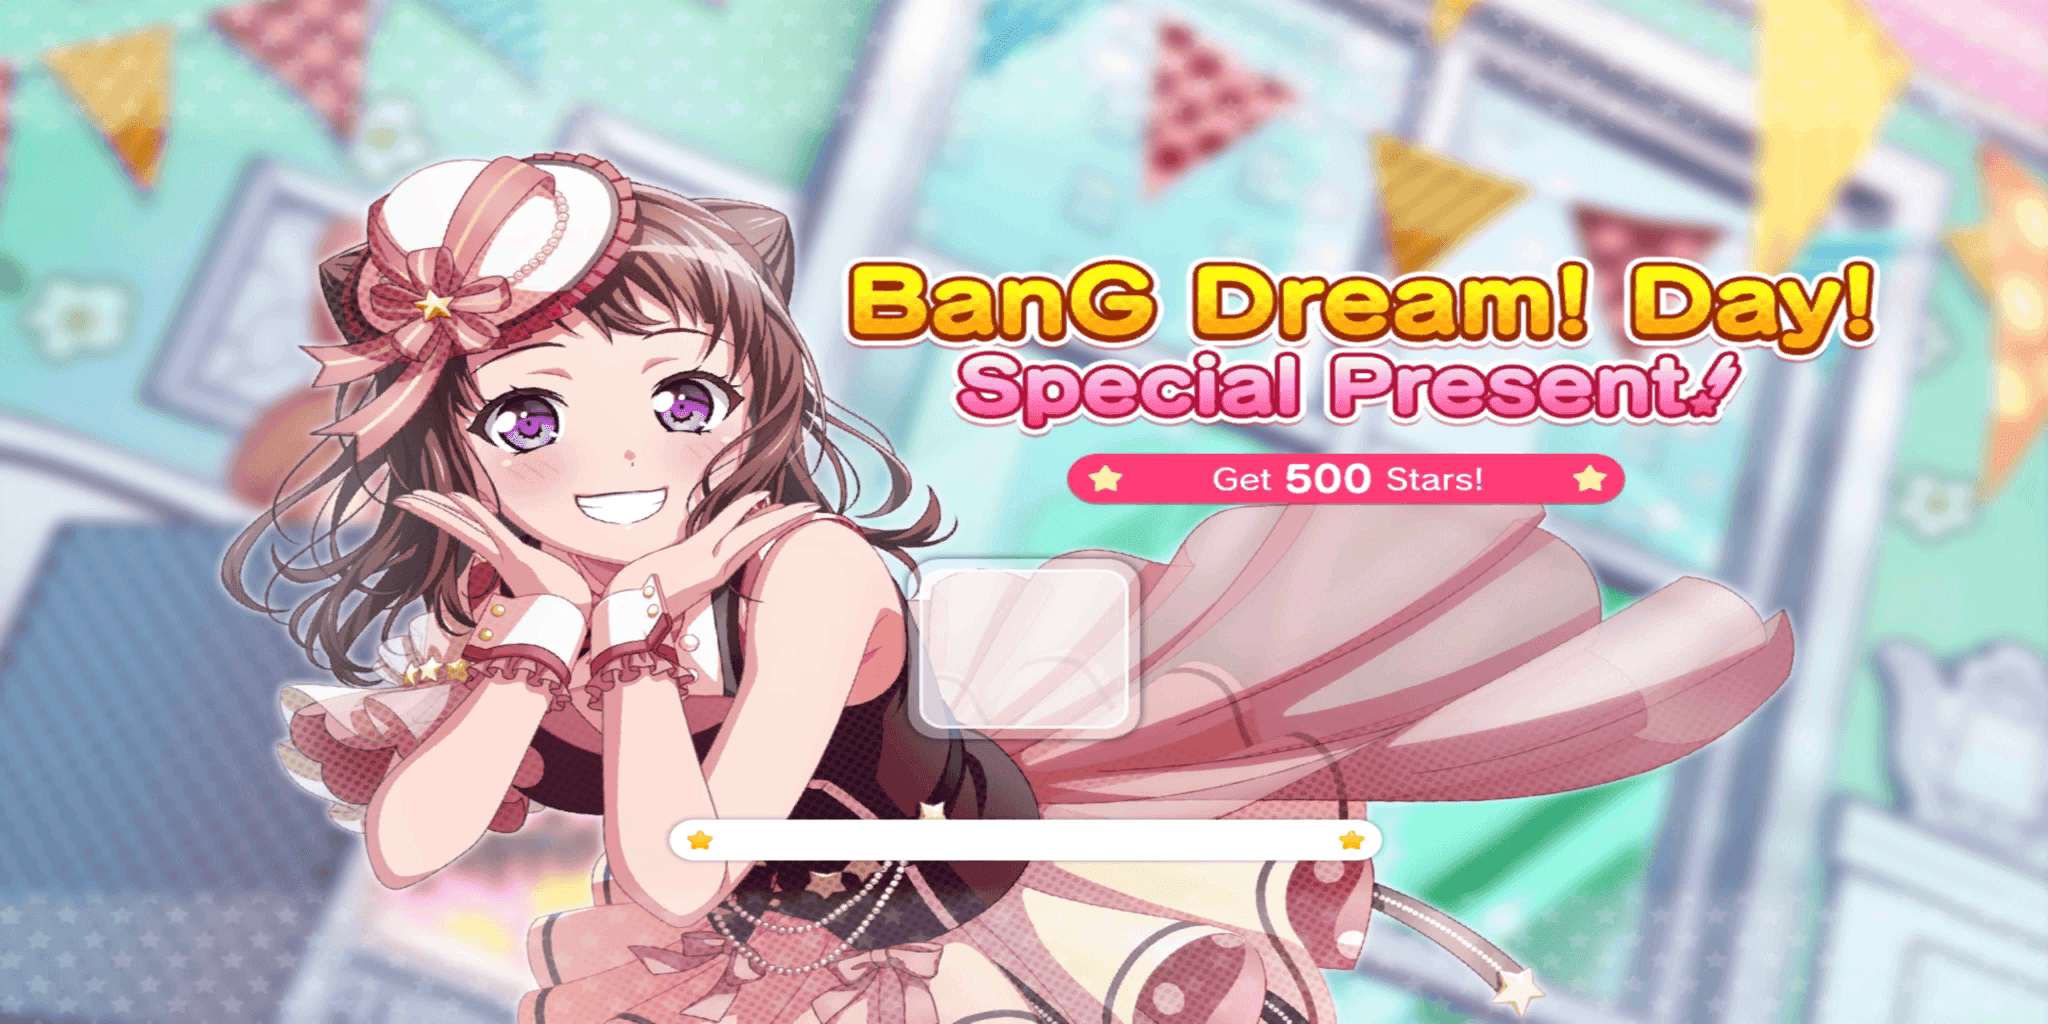 Events  Bestdori! - The Ultimate BanG Dream! GBP Resource Site